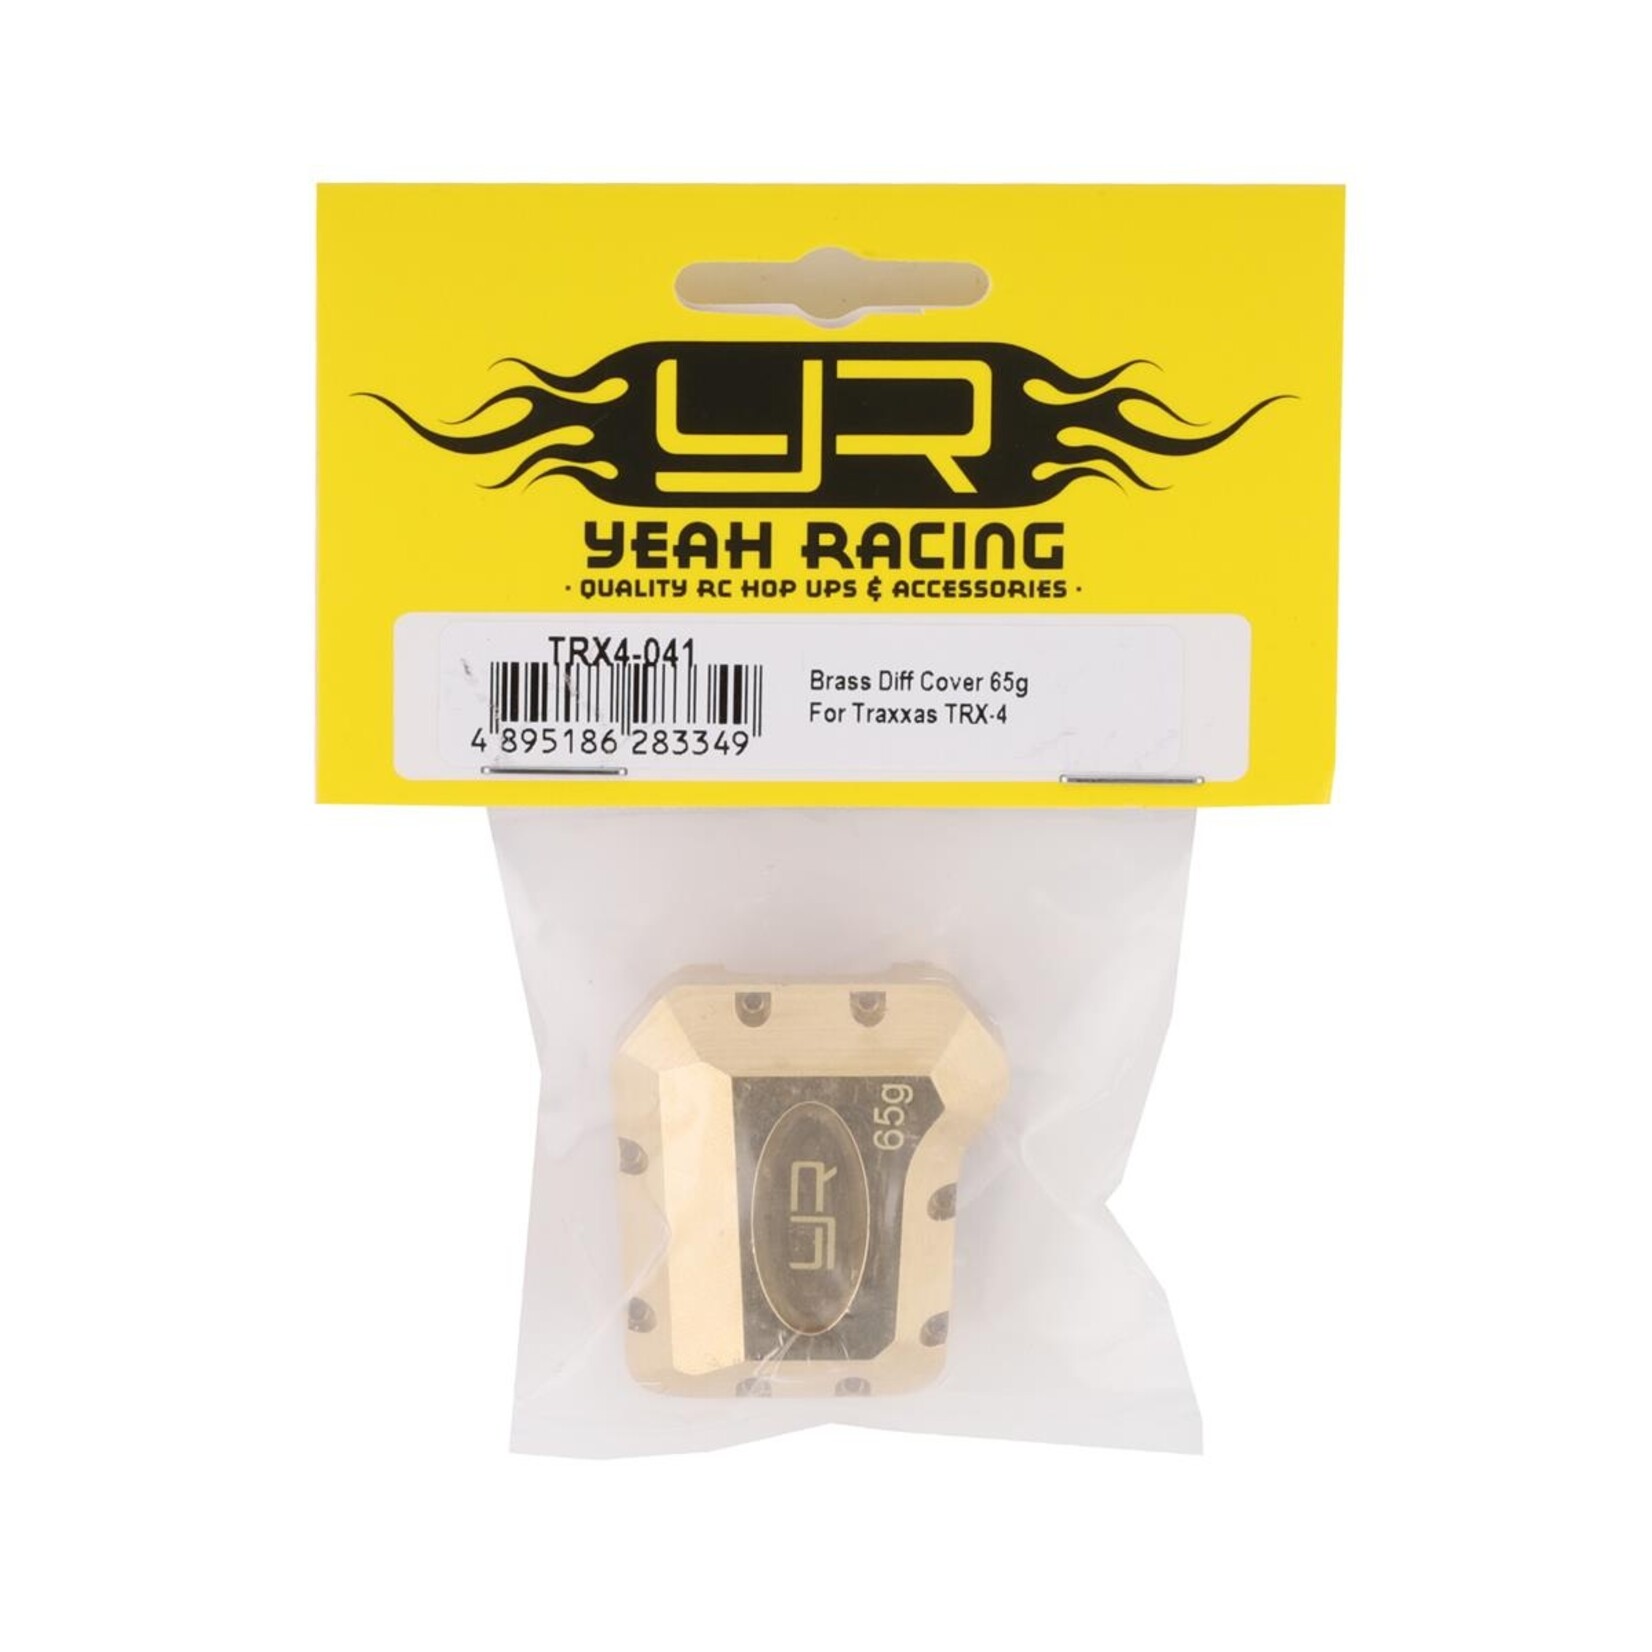 Yeah Racing Yeah Racing TRX-4/TRX-6 Brass Differential Cover (65g) #TRX4-041